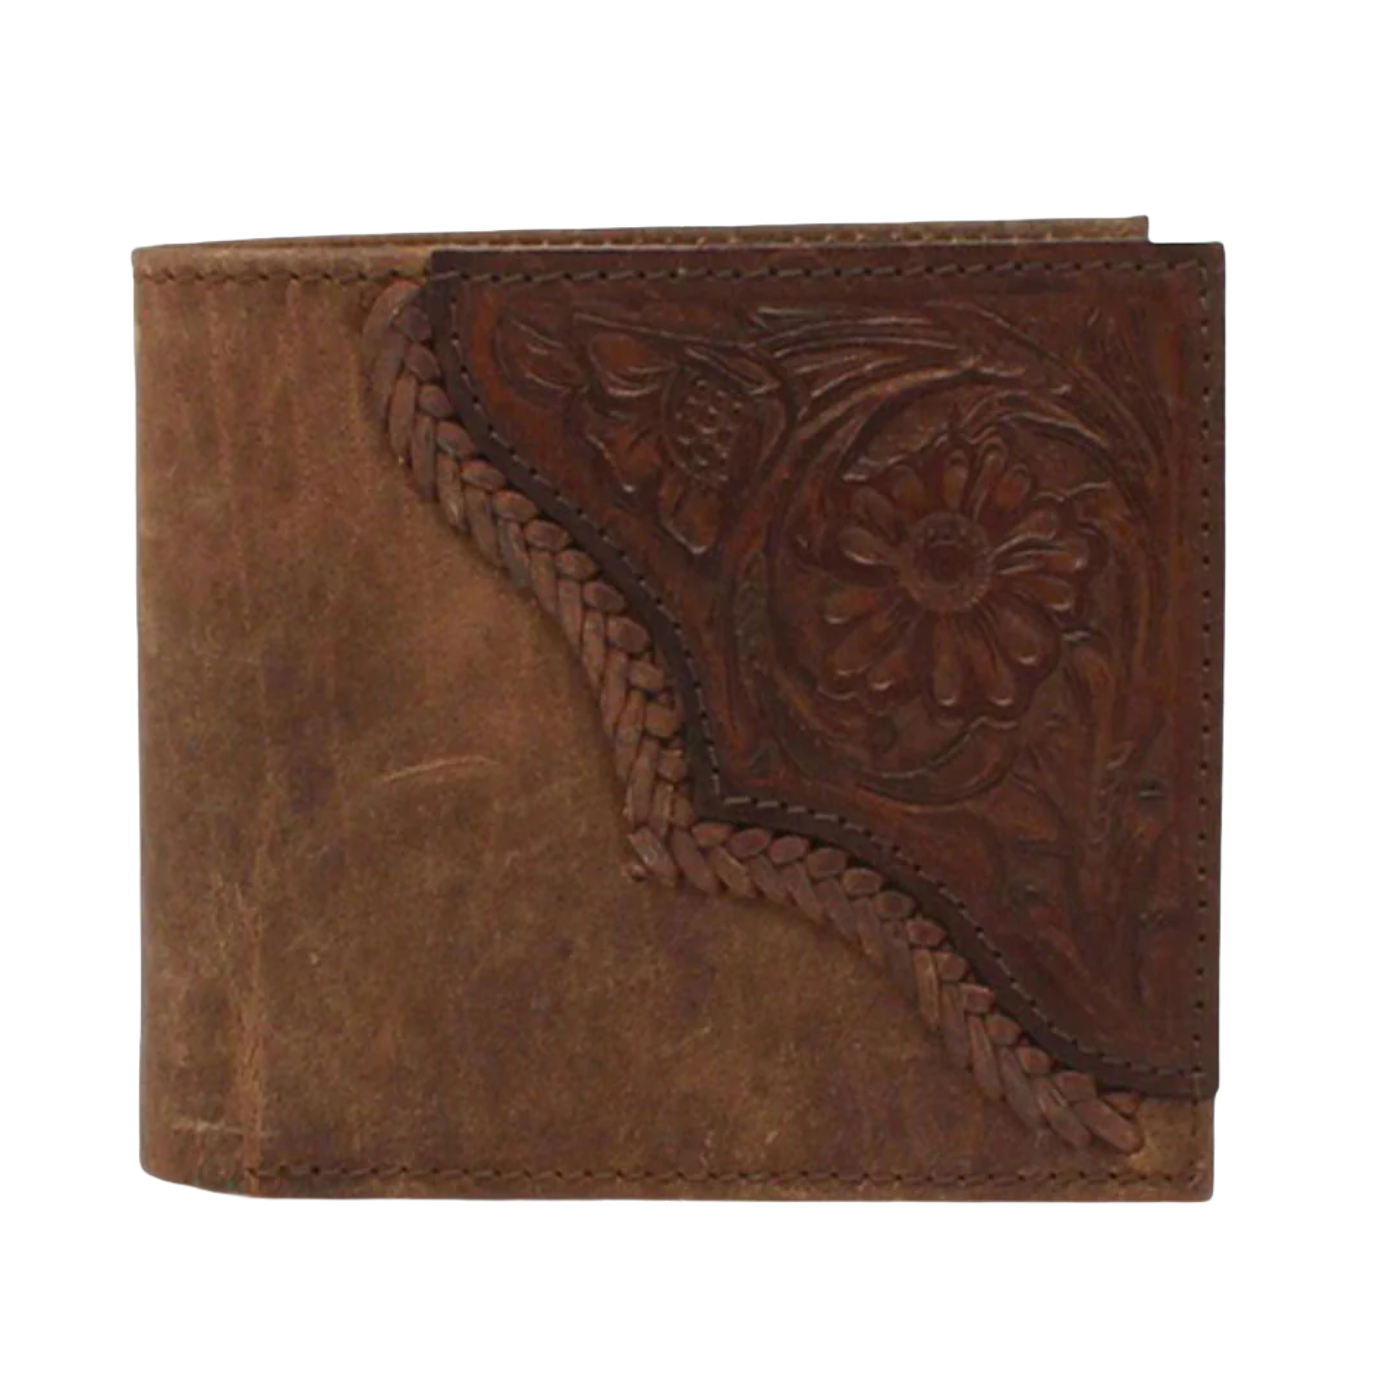 Nocona® Men's Floral Embossed Brown Leather Bifold Wallet N500036002